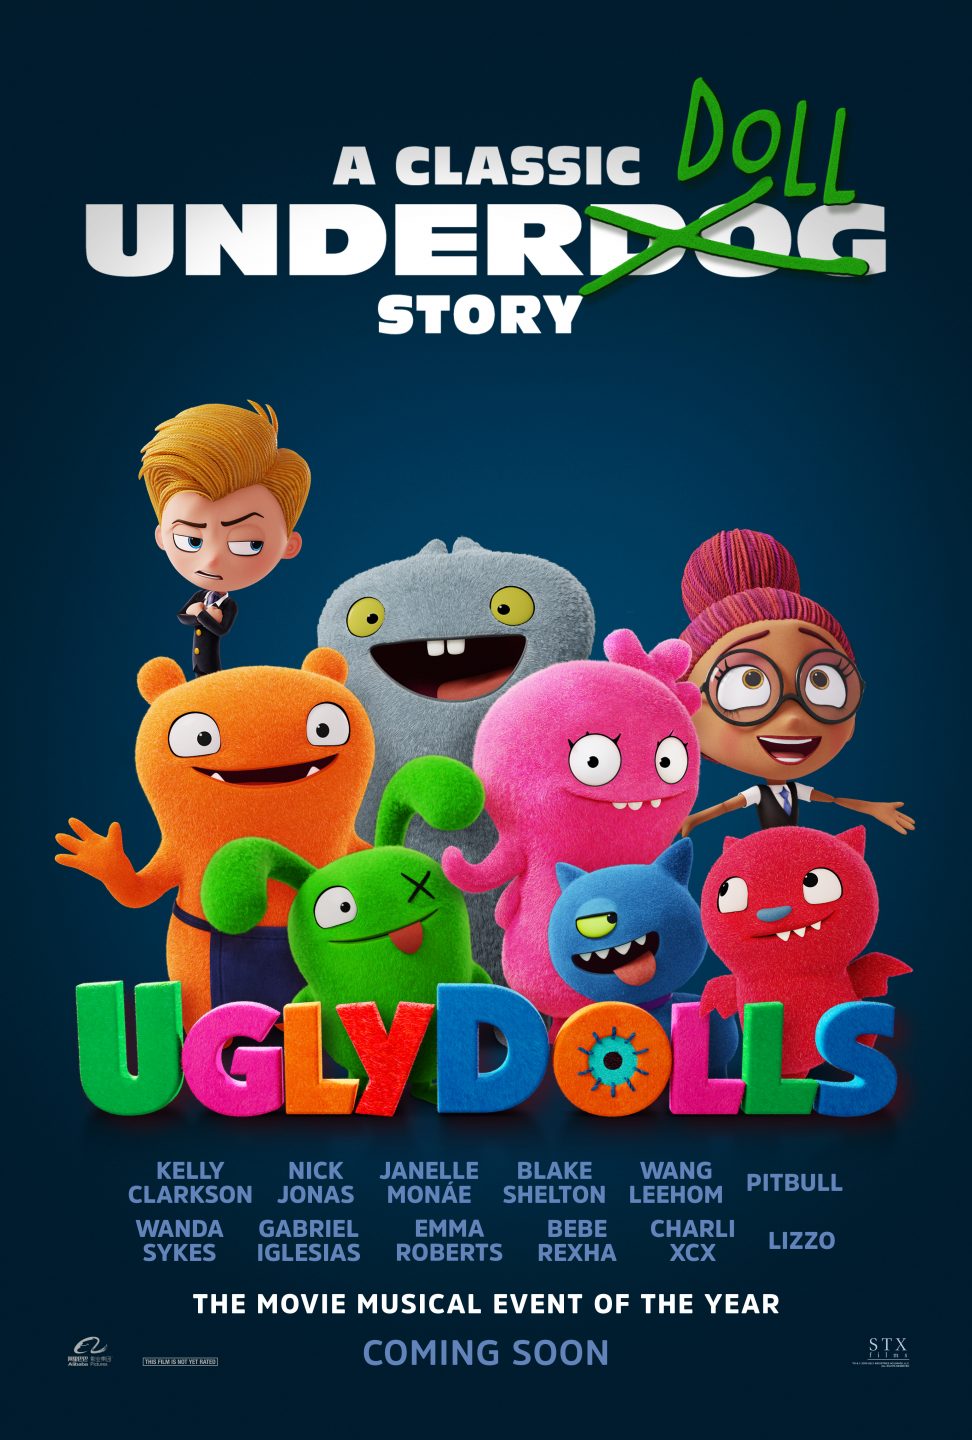 UGLYDOLLS poster (STXFilms)